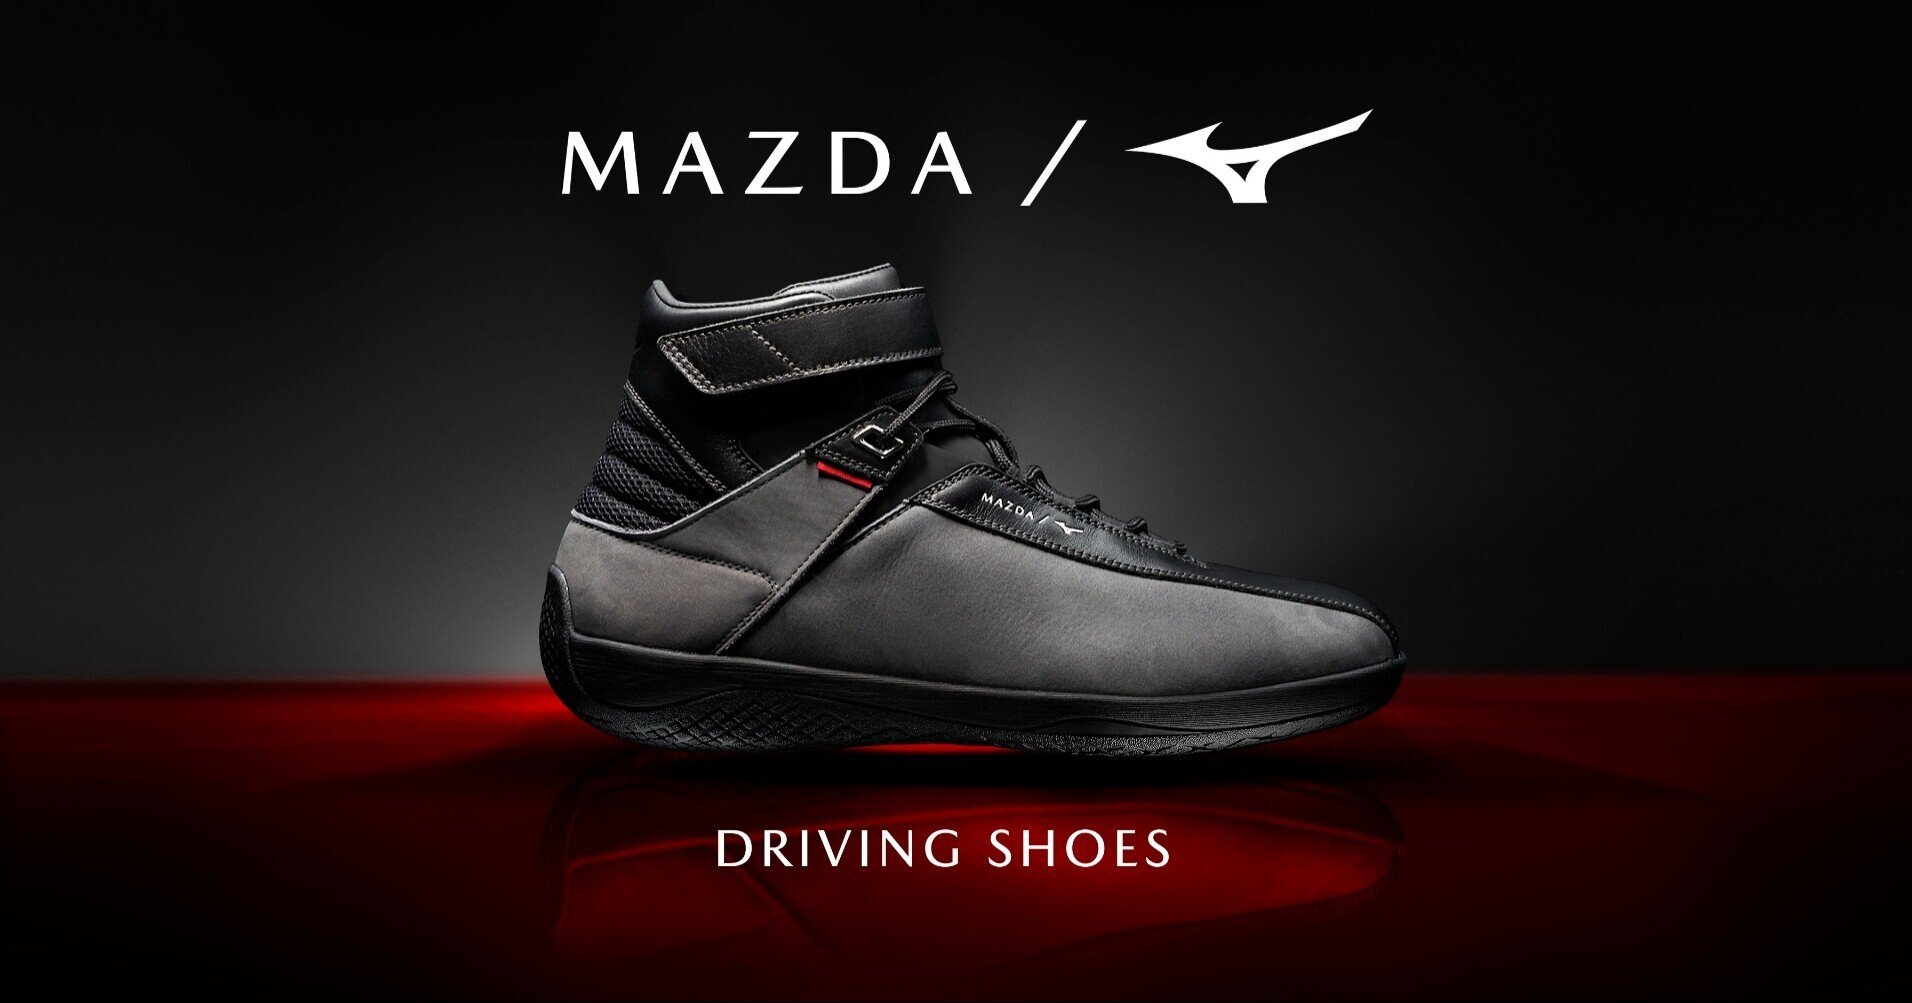 Mazda ドライビングシューズ 限定品 - スニーカー